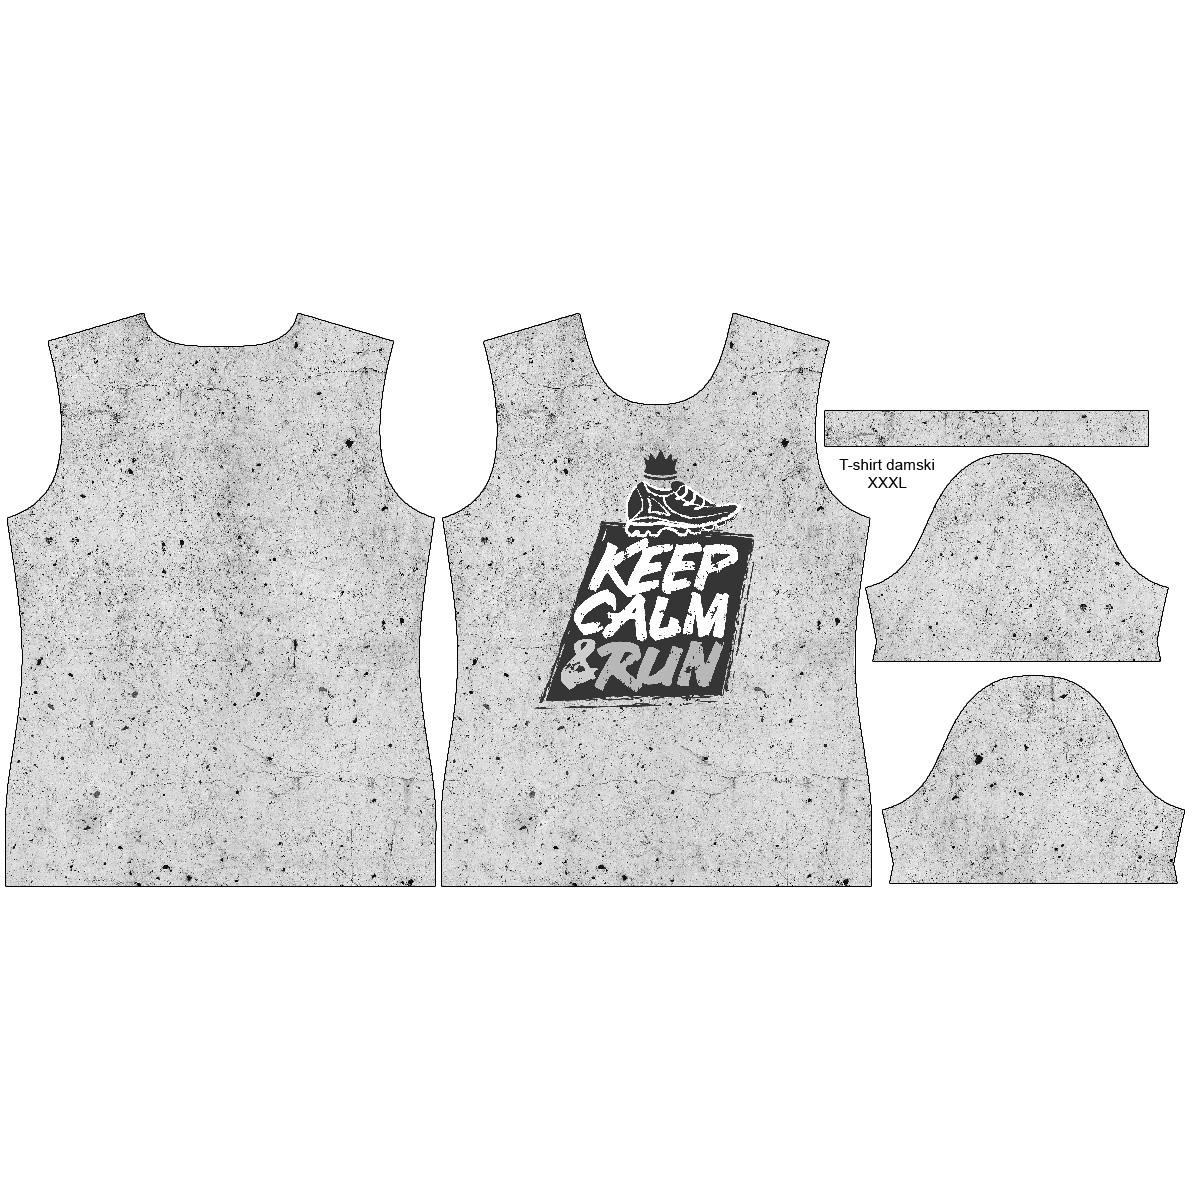 WOMEN’S T-SHIRT - KEEP CALM & RUN / concrete - single jersey